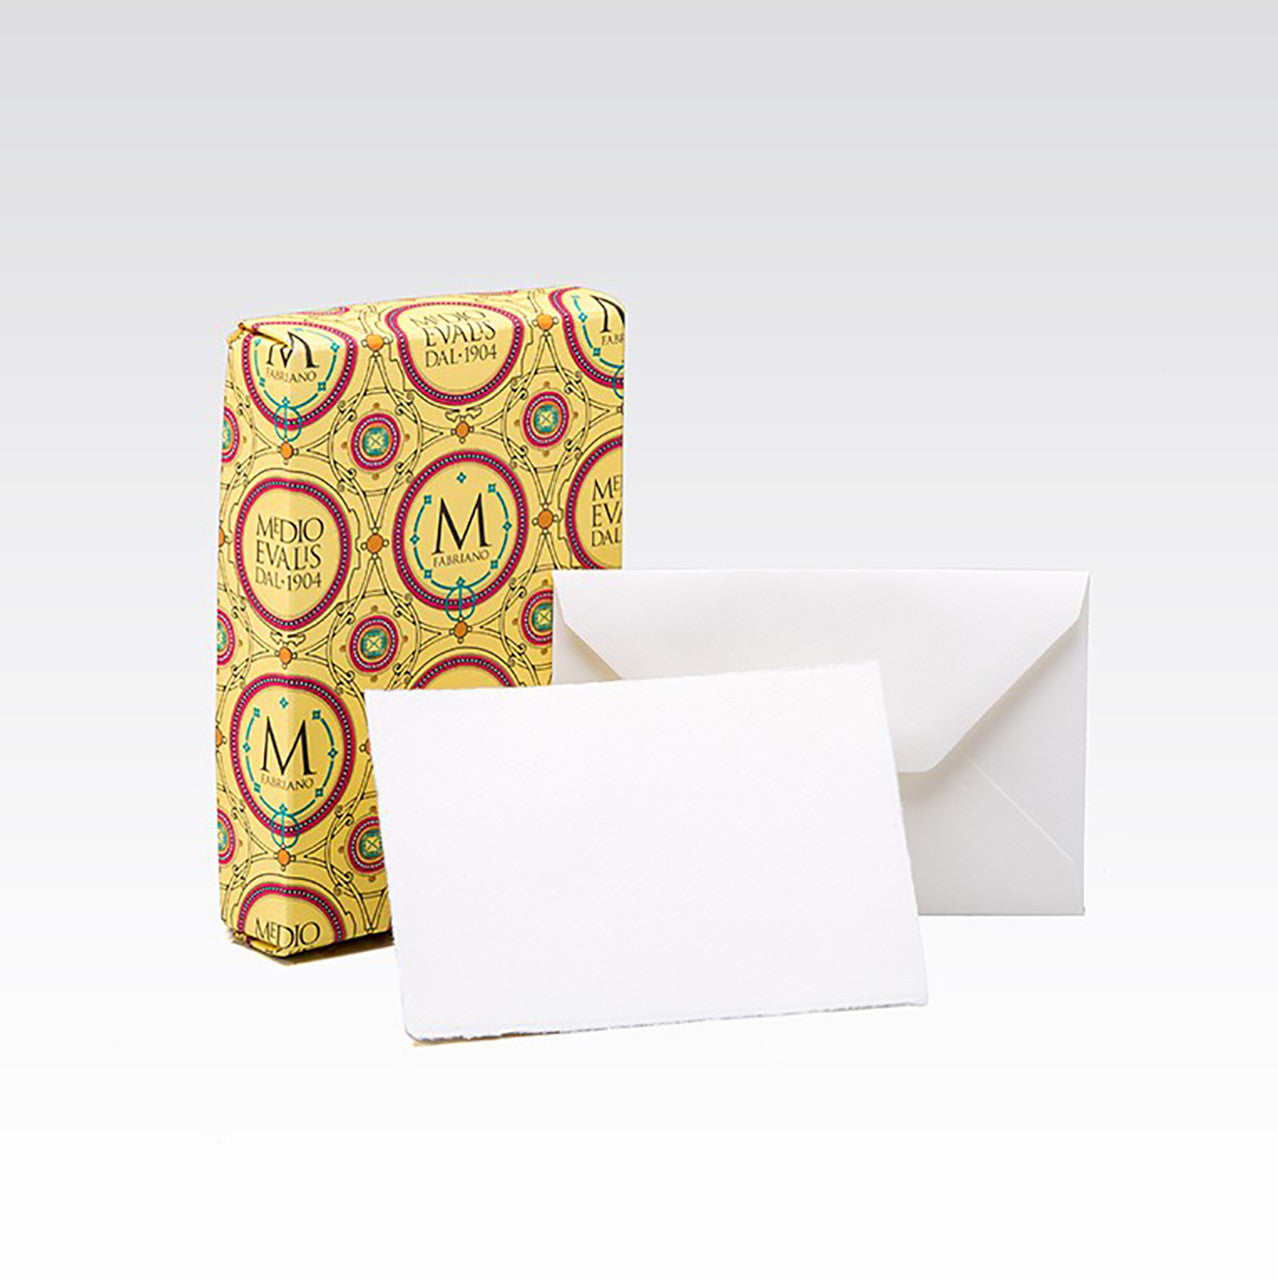 Fabriano Medioevalis Flat Card & Envelopes Set / Medium